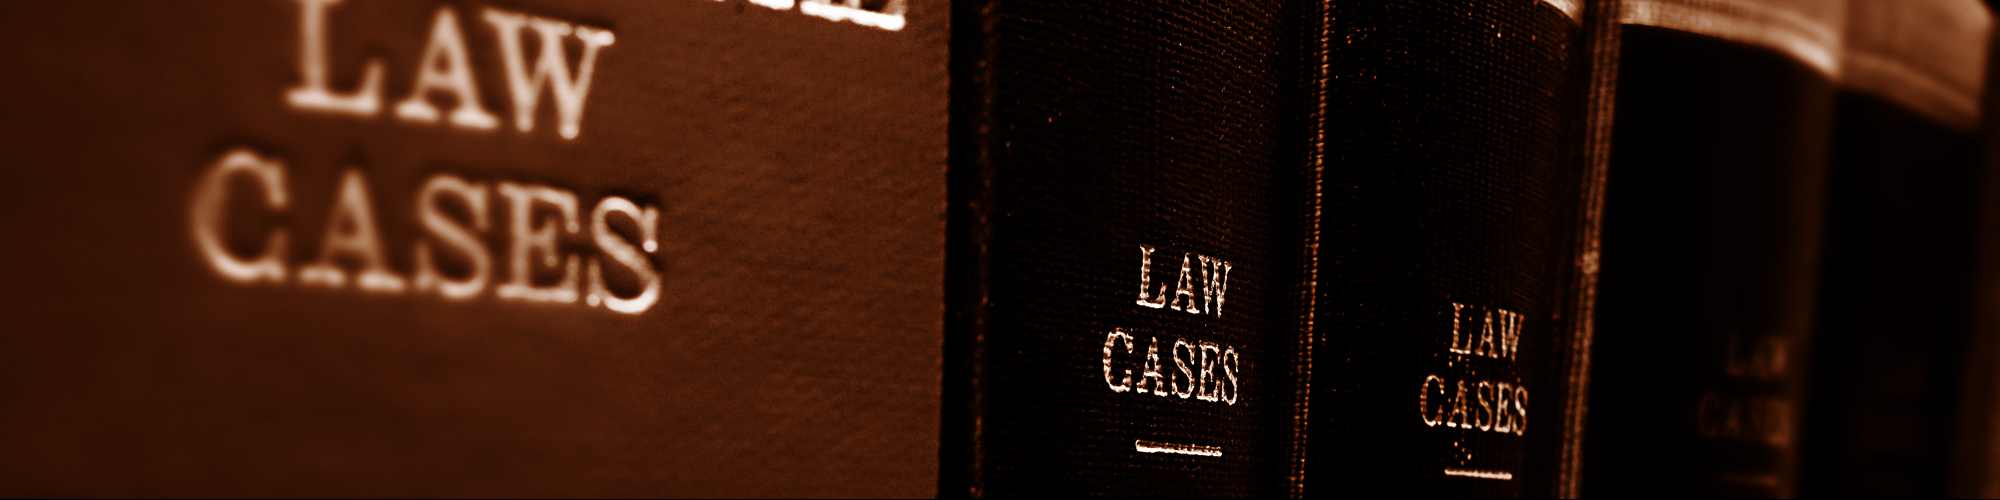 Law Class books